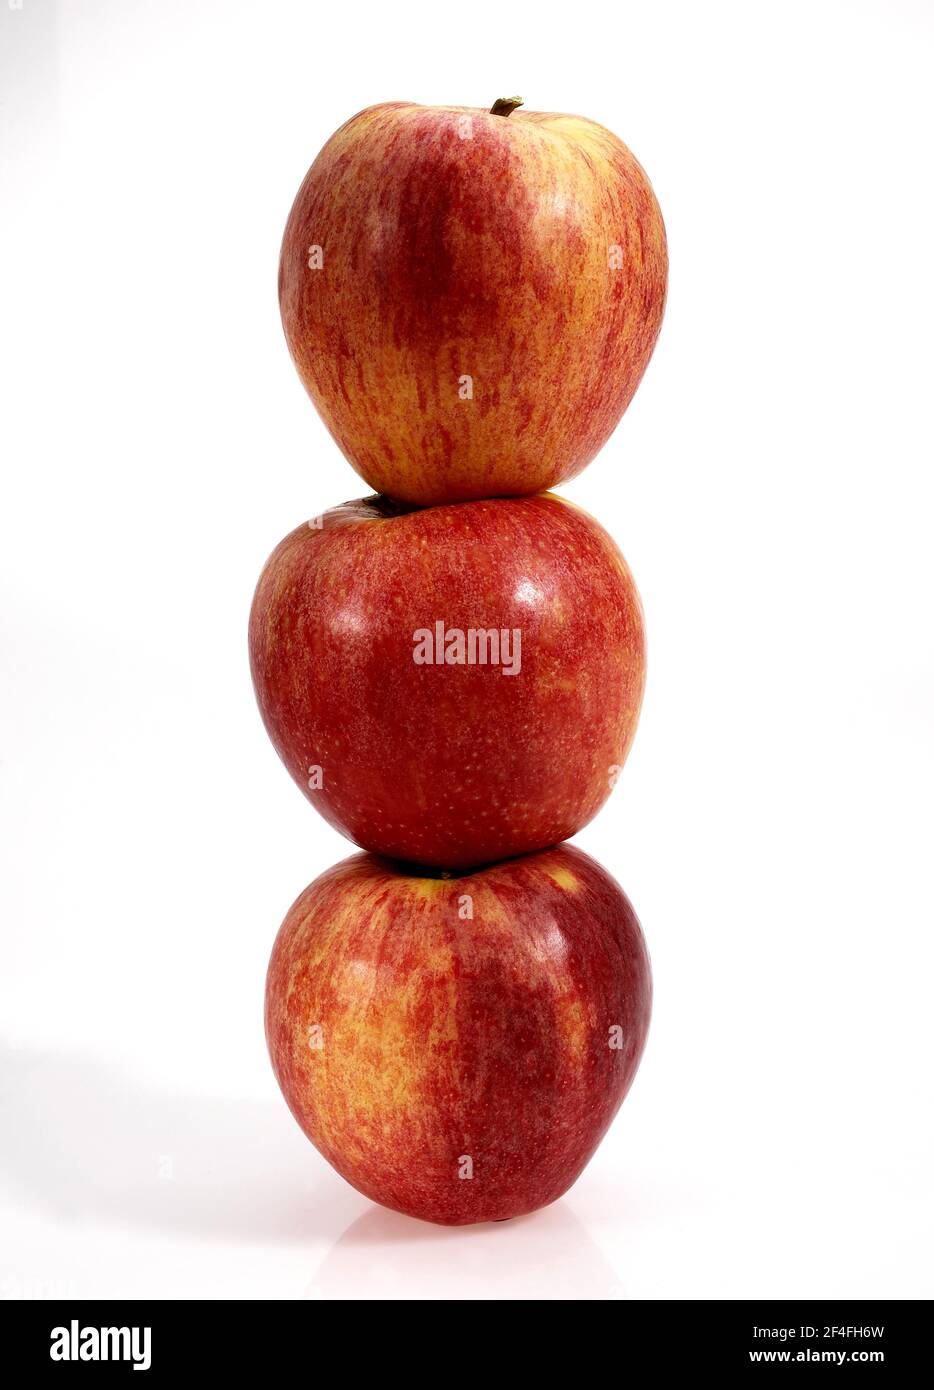 https://c8.alamy.com/comp/2F4FH6W/malus-domestica-cultivated-apple-malus-domestica-apple-apples-rose-family-royal-gala-apples-malus-domestica-exempt-cultivated-apple-apple-2F4FH6W.jpg